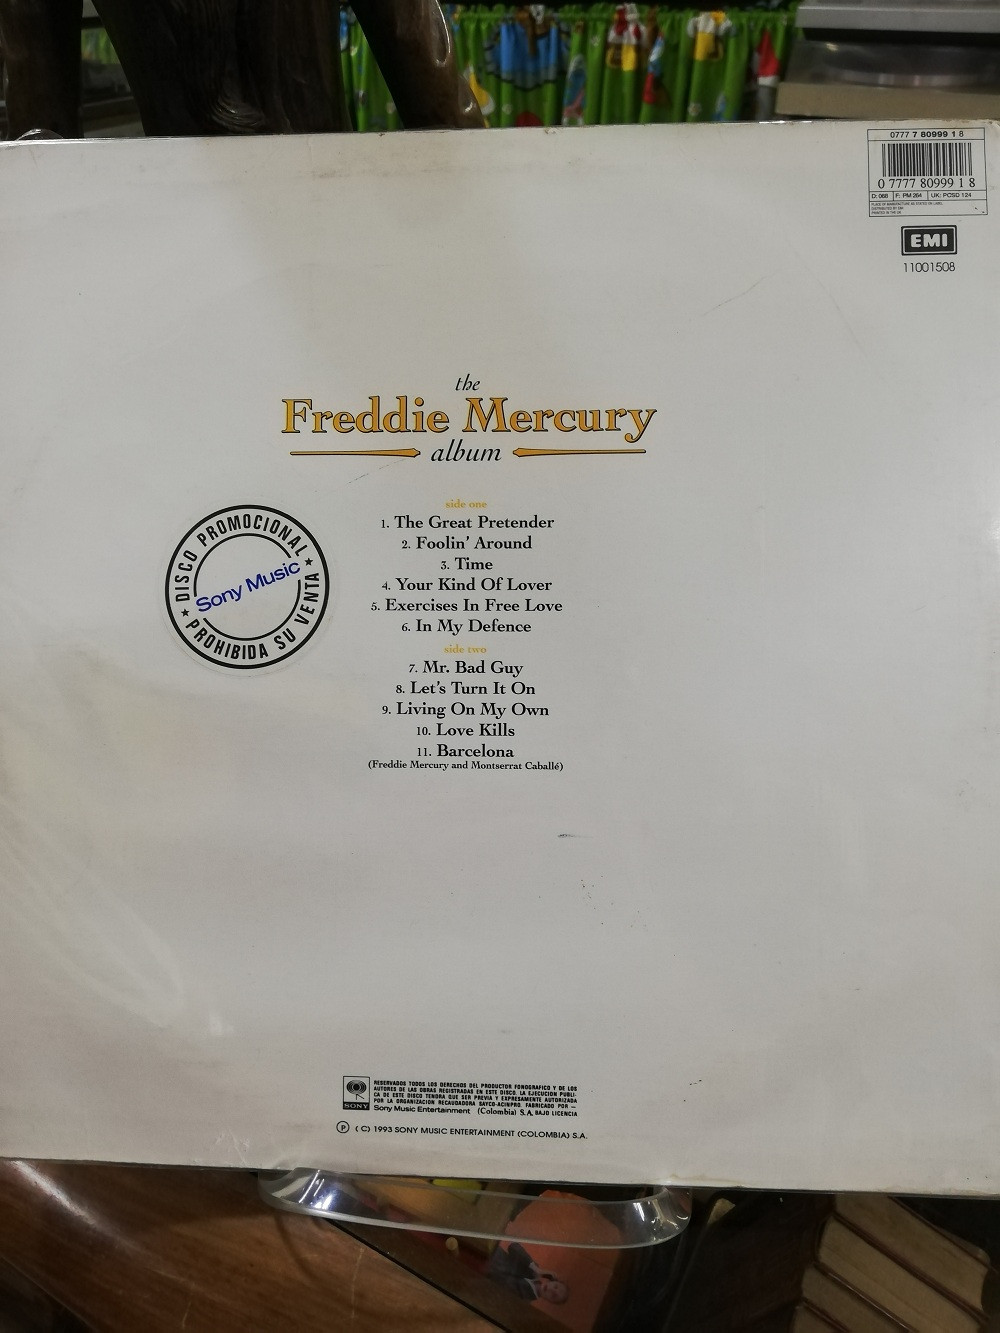 Imagen LP FREDDIE MERCURY - THE FREDDIE MERCURY ALBUM 2